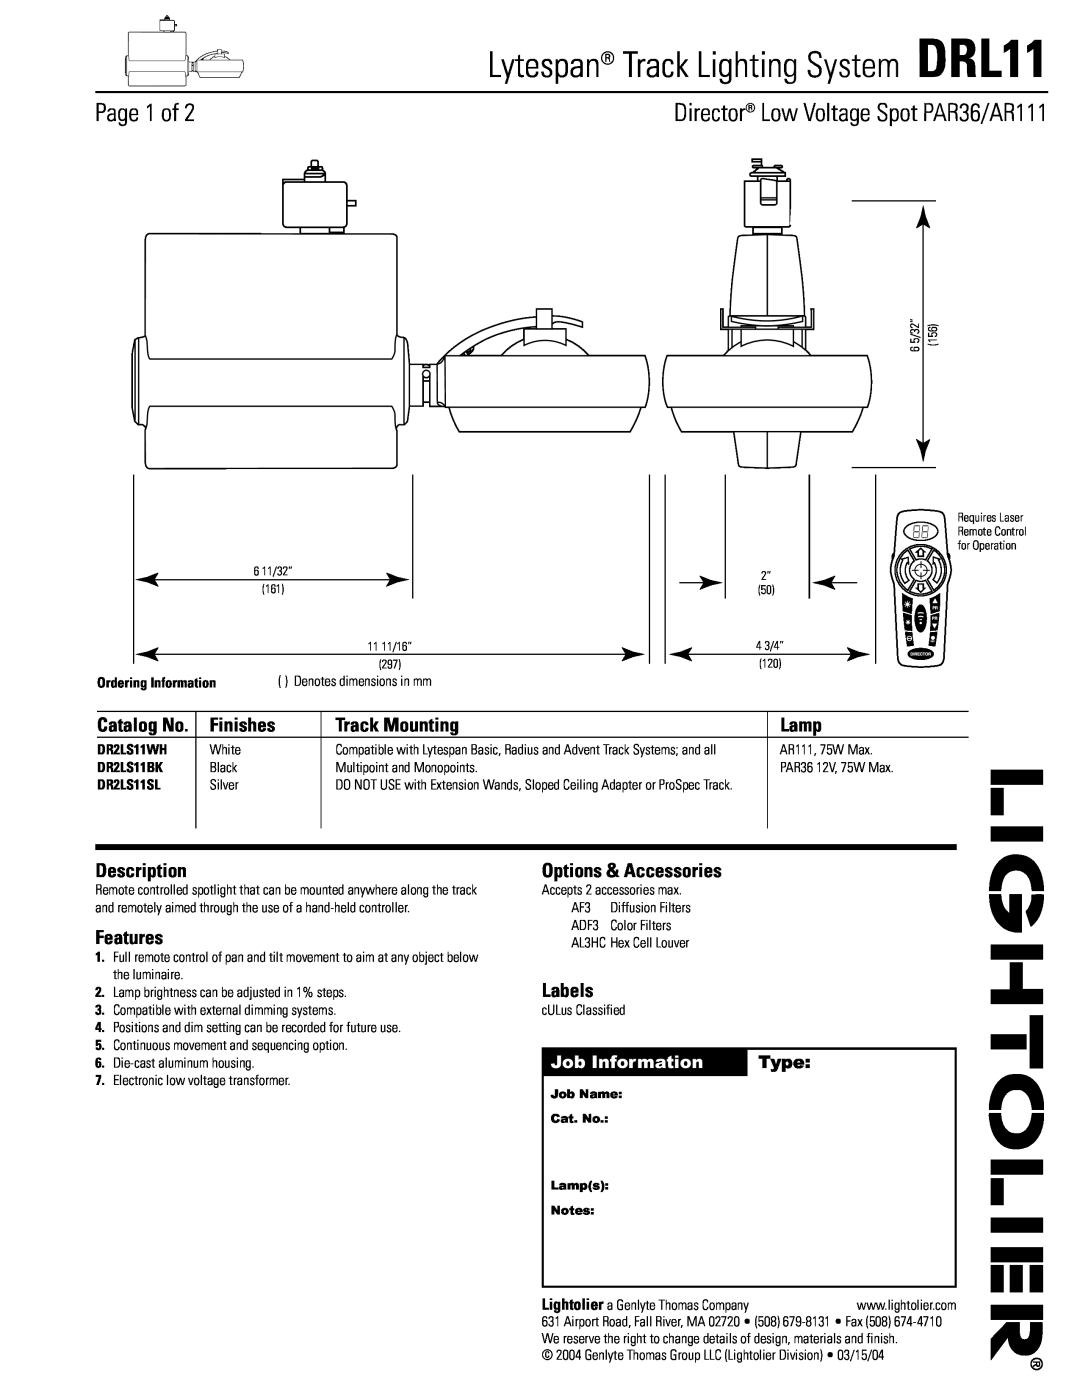 Lightolier dimensions Lytespan Track Lighting System DRL11, Page 1 of, Director Low Voltage Spot PAR36/AR111, Finishes 